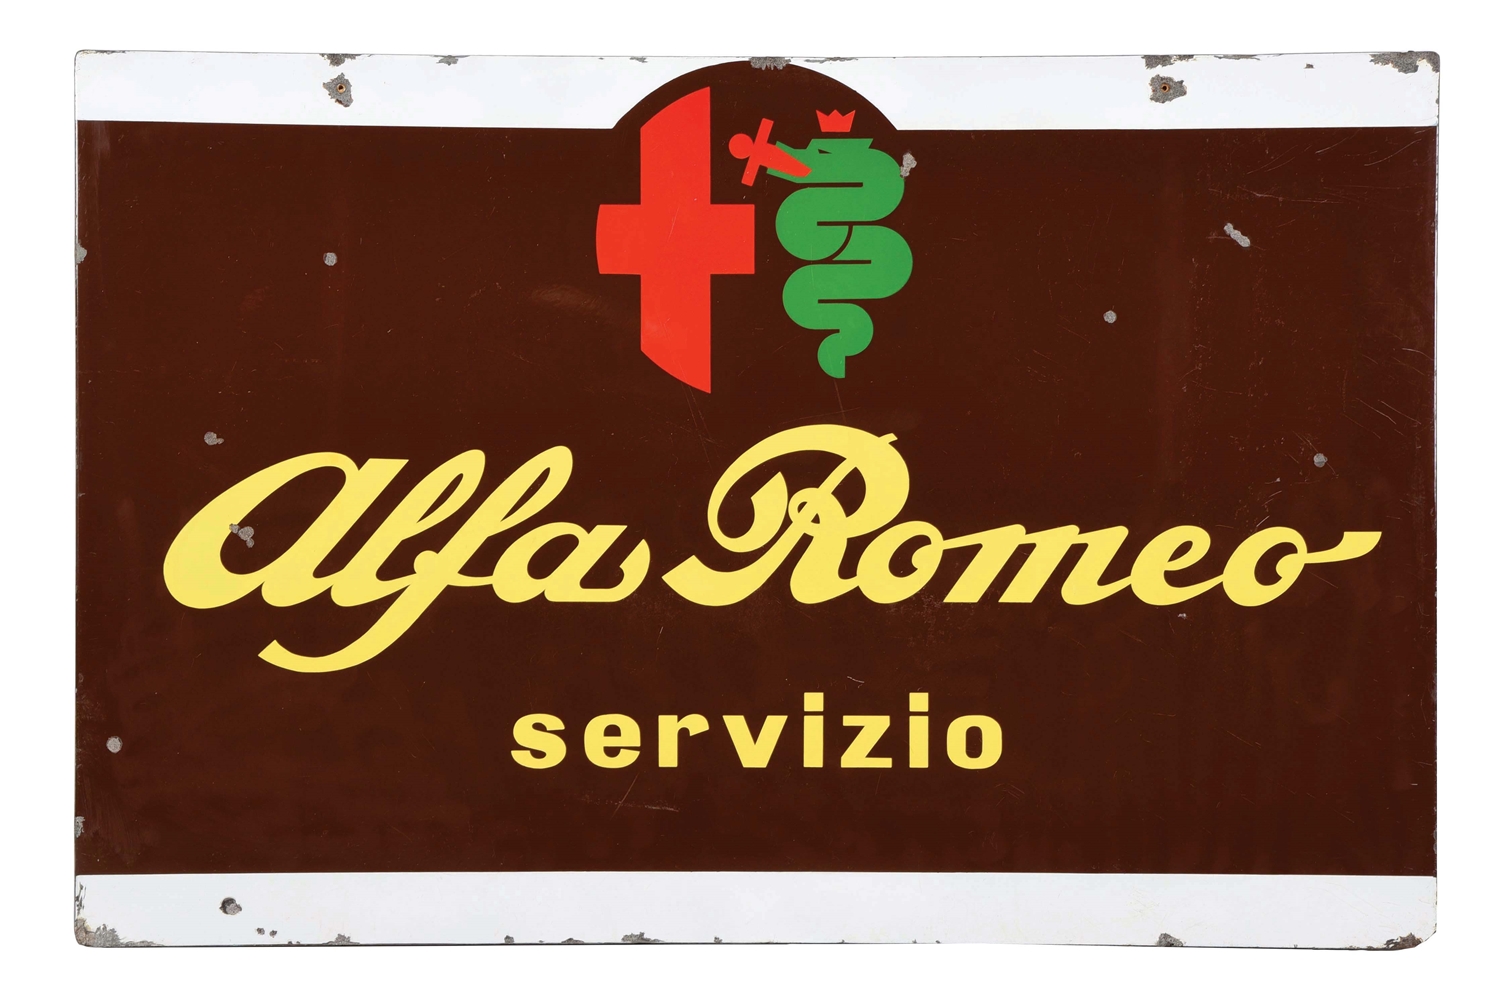 ALFA ROMEO SERVIZIO PORCELAIN SIGN W/ CREST GRAPHIC AND COOKIE CUTTER EDGE. 